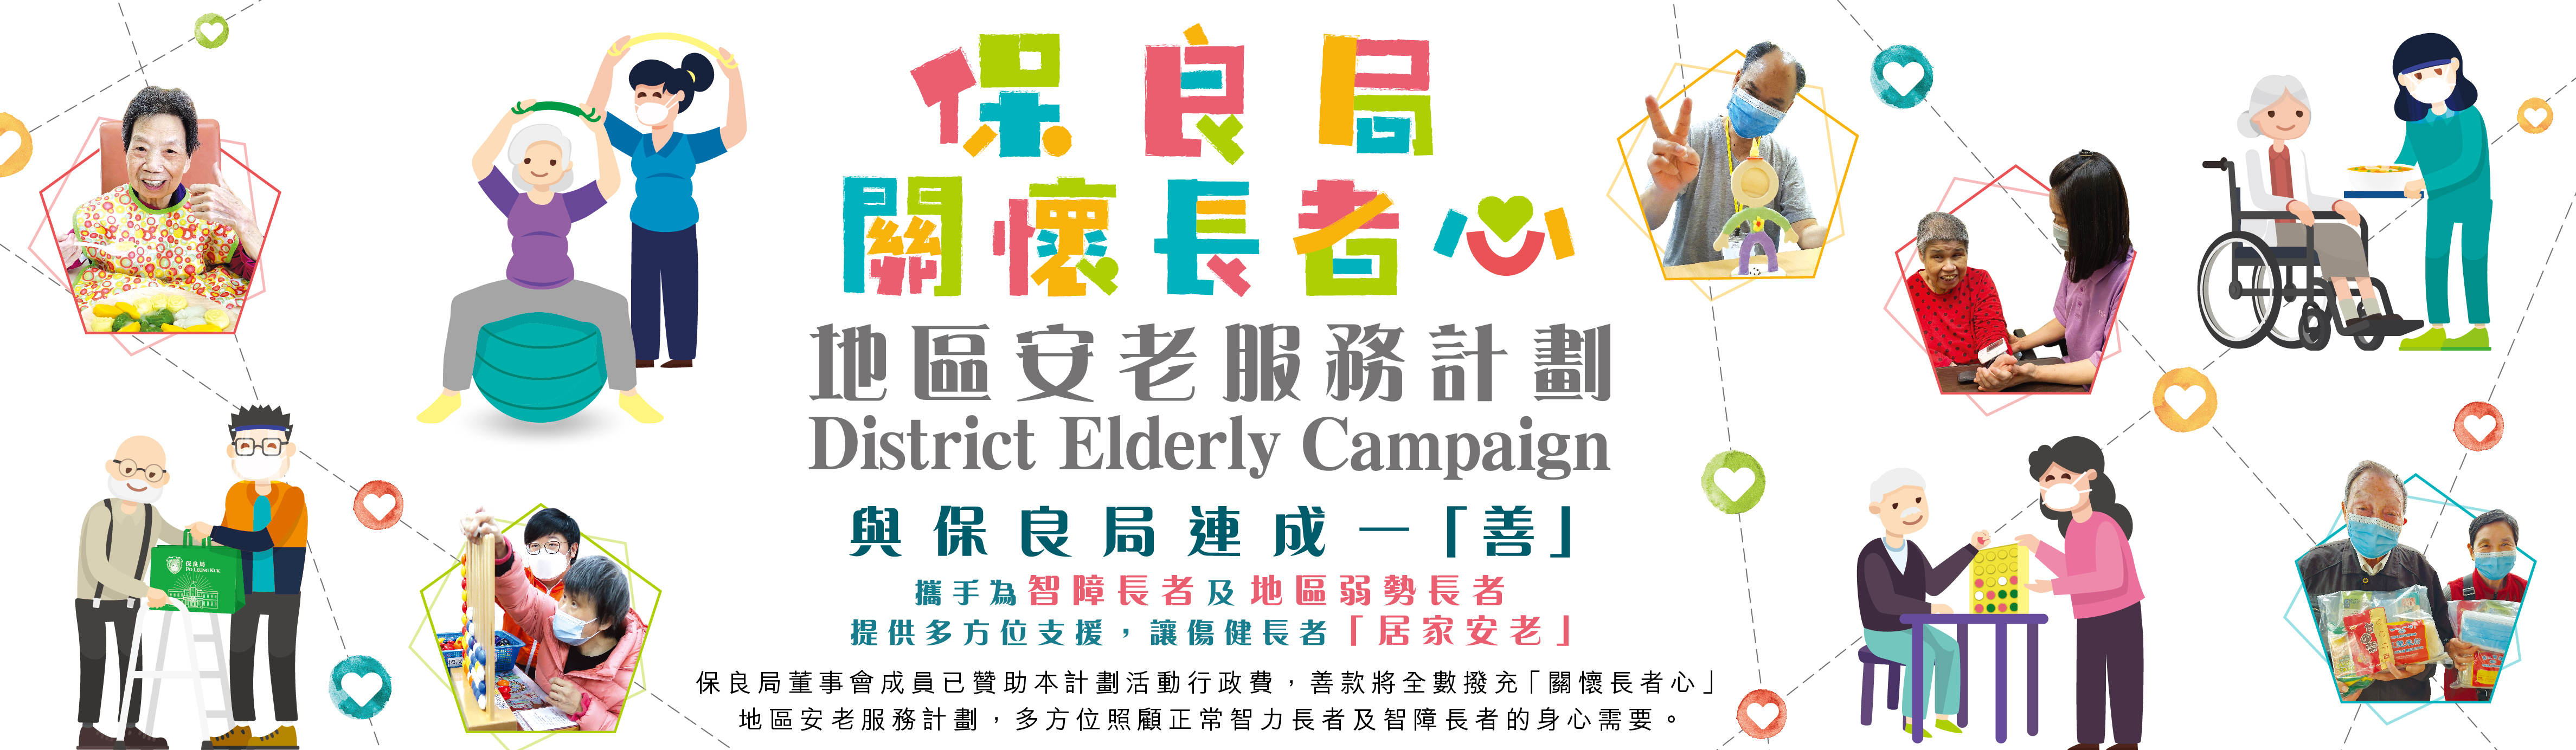 District Elderly Campaign Web Banner